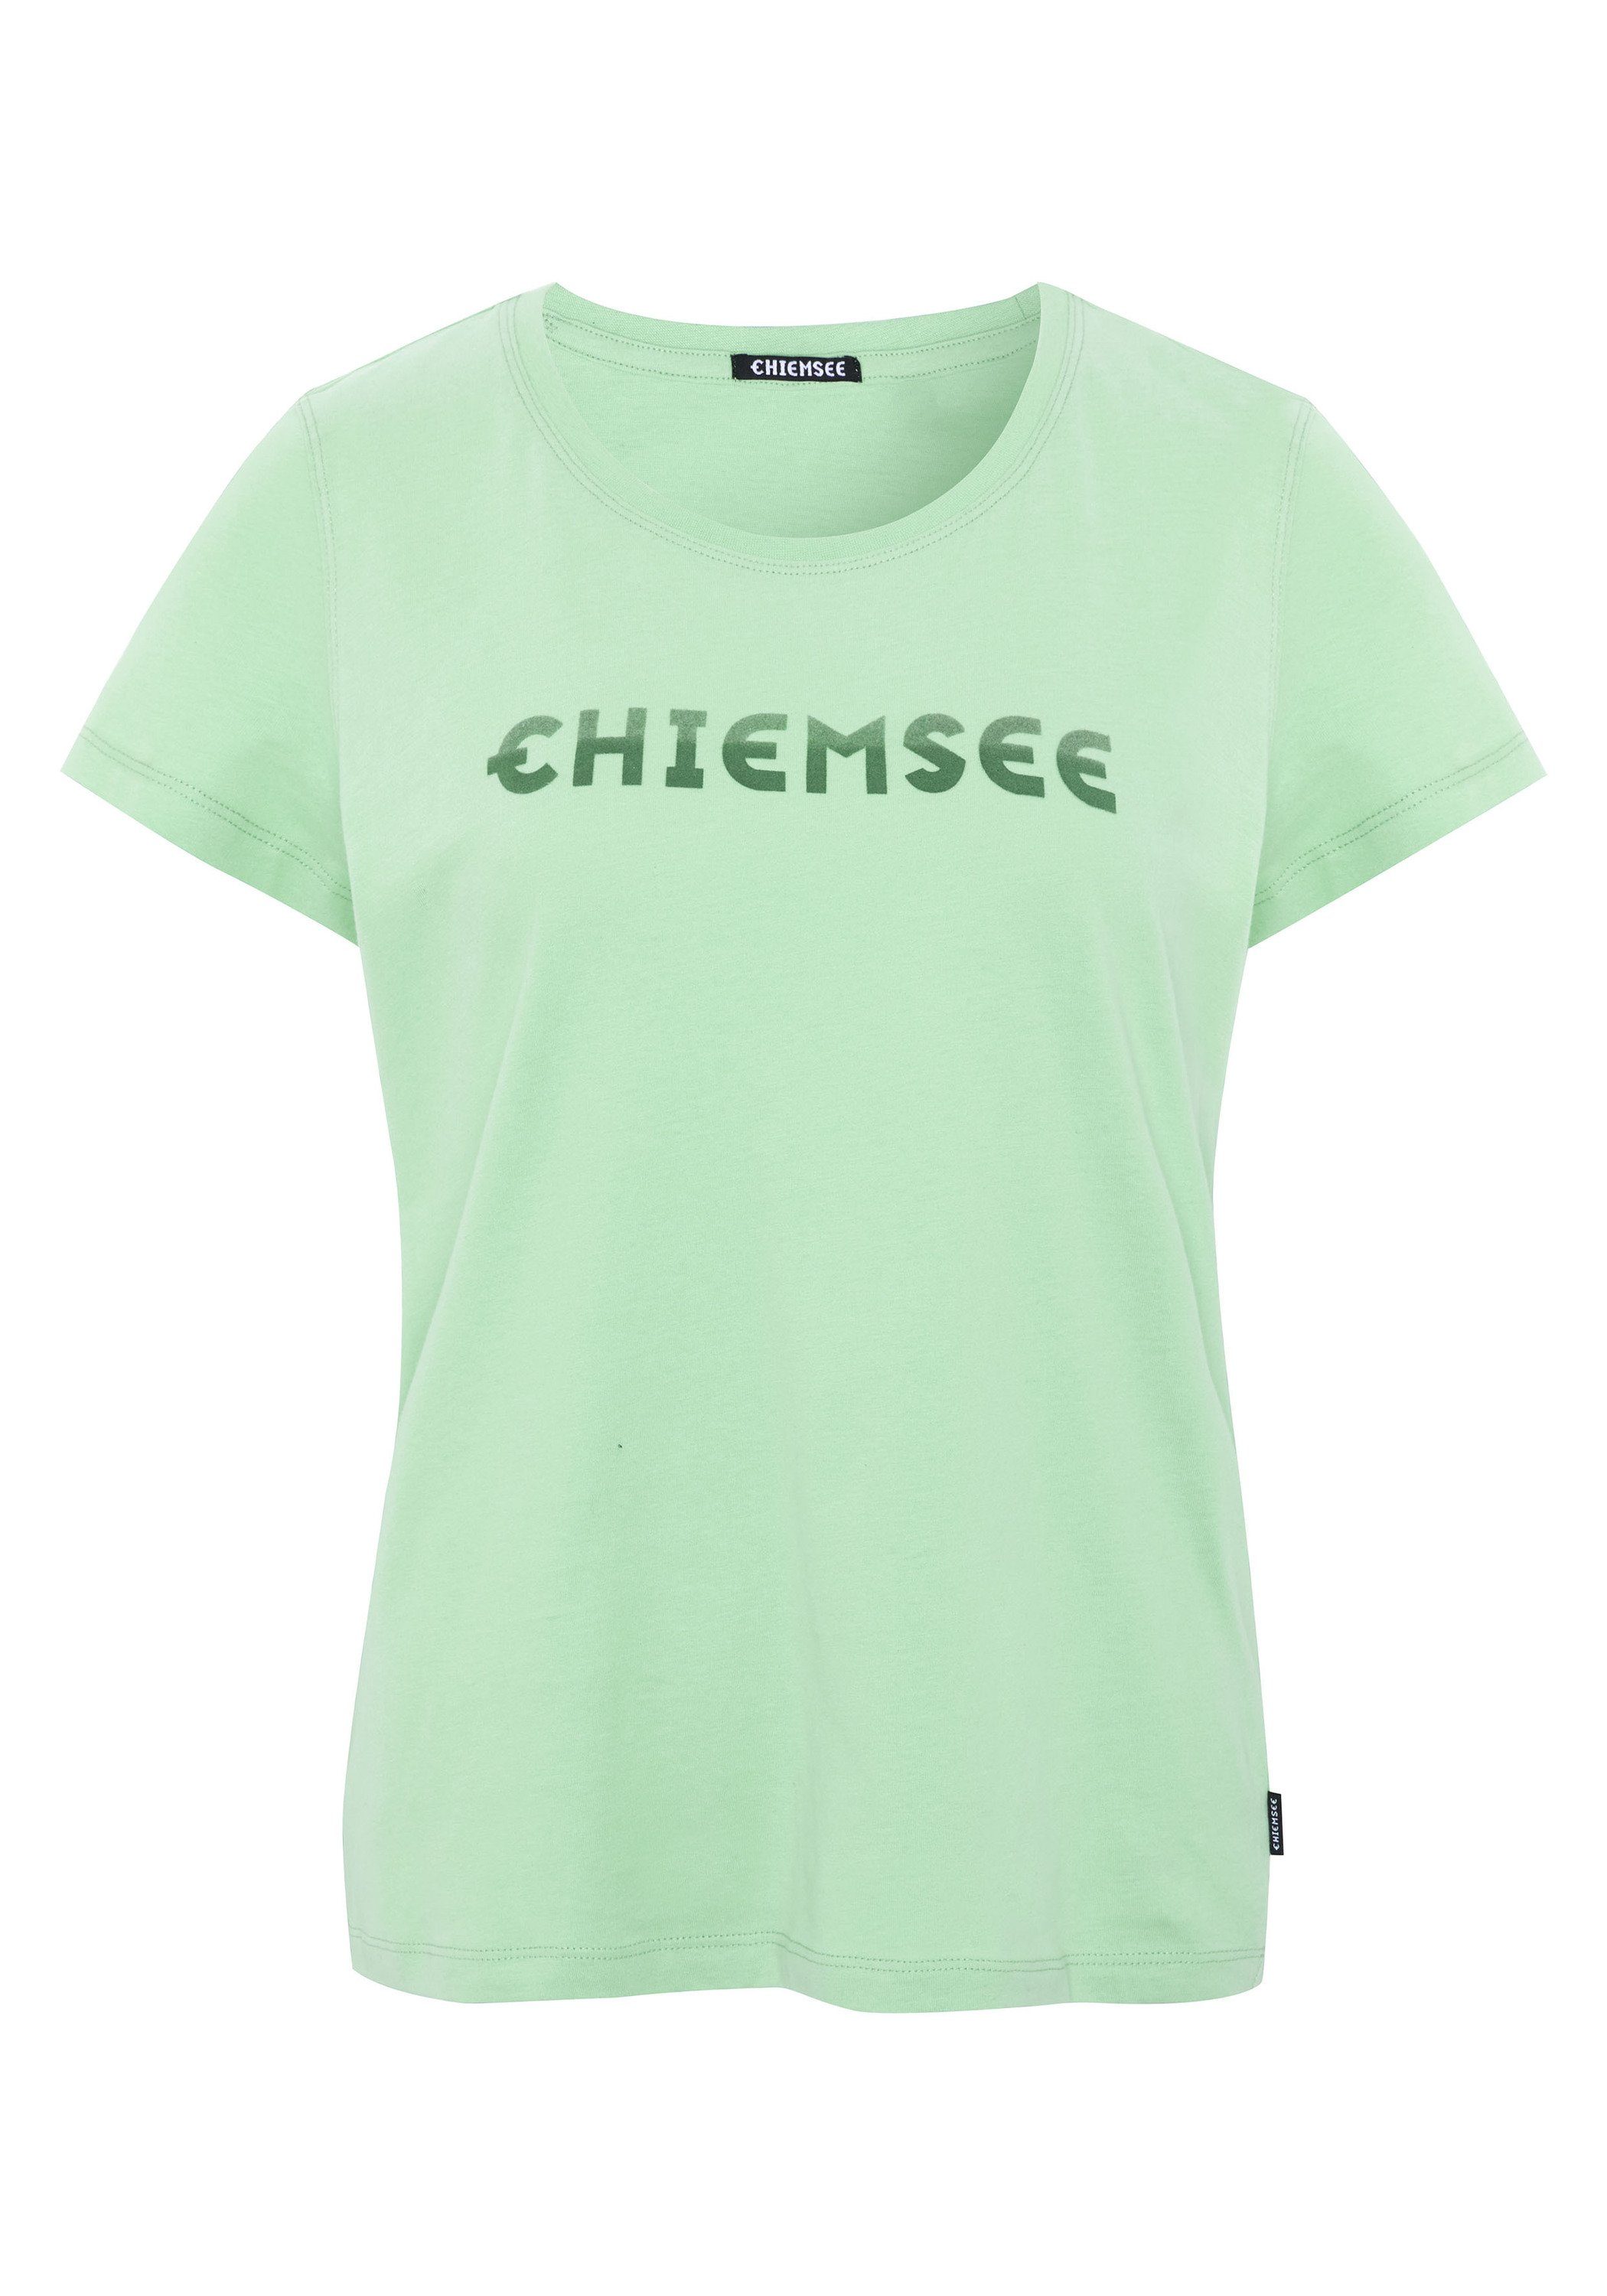 Chiemsee Print-Shirt T-Shirt mit Logo in Farbverlauf-Optik 1 Neptune Green